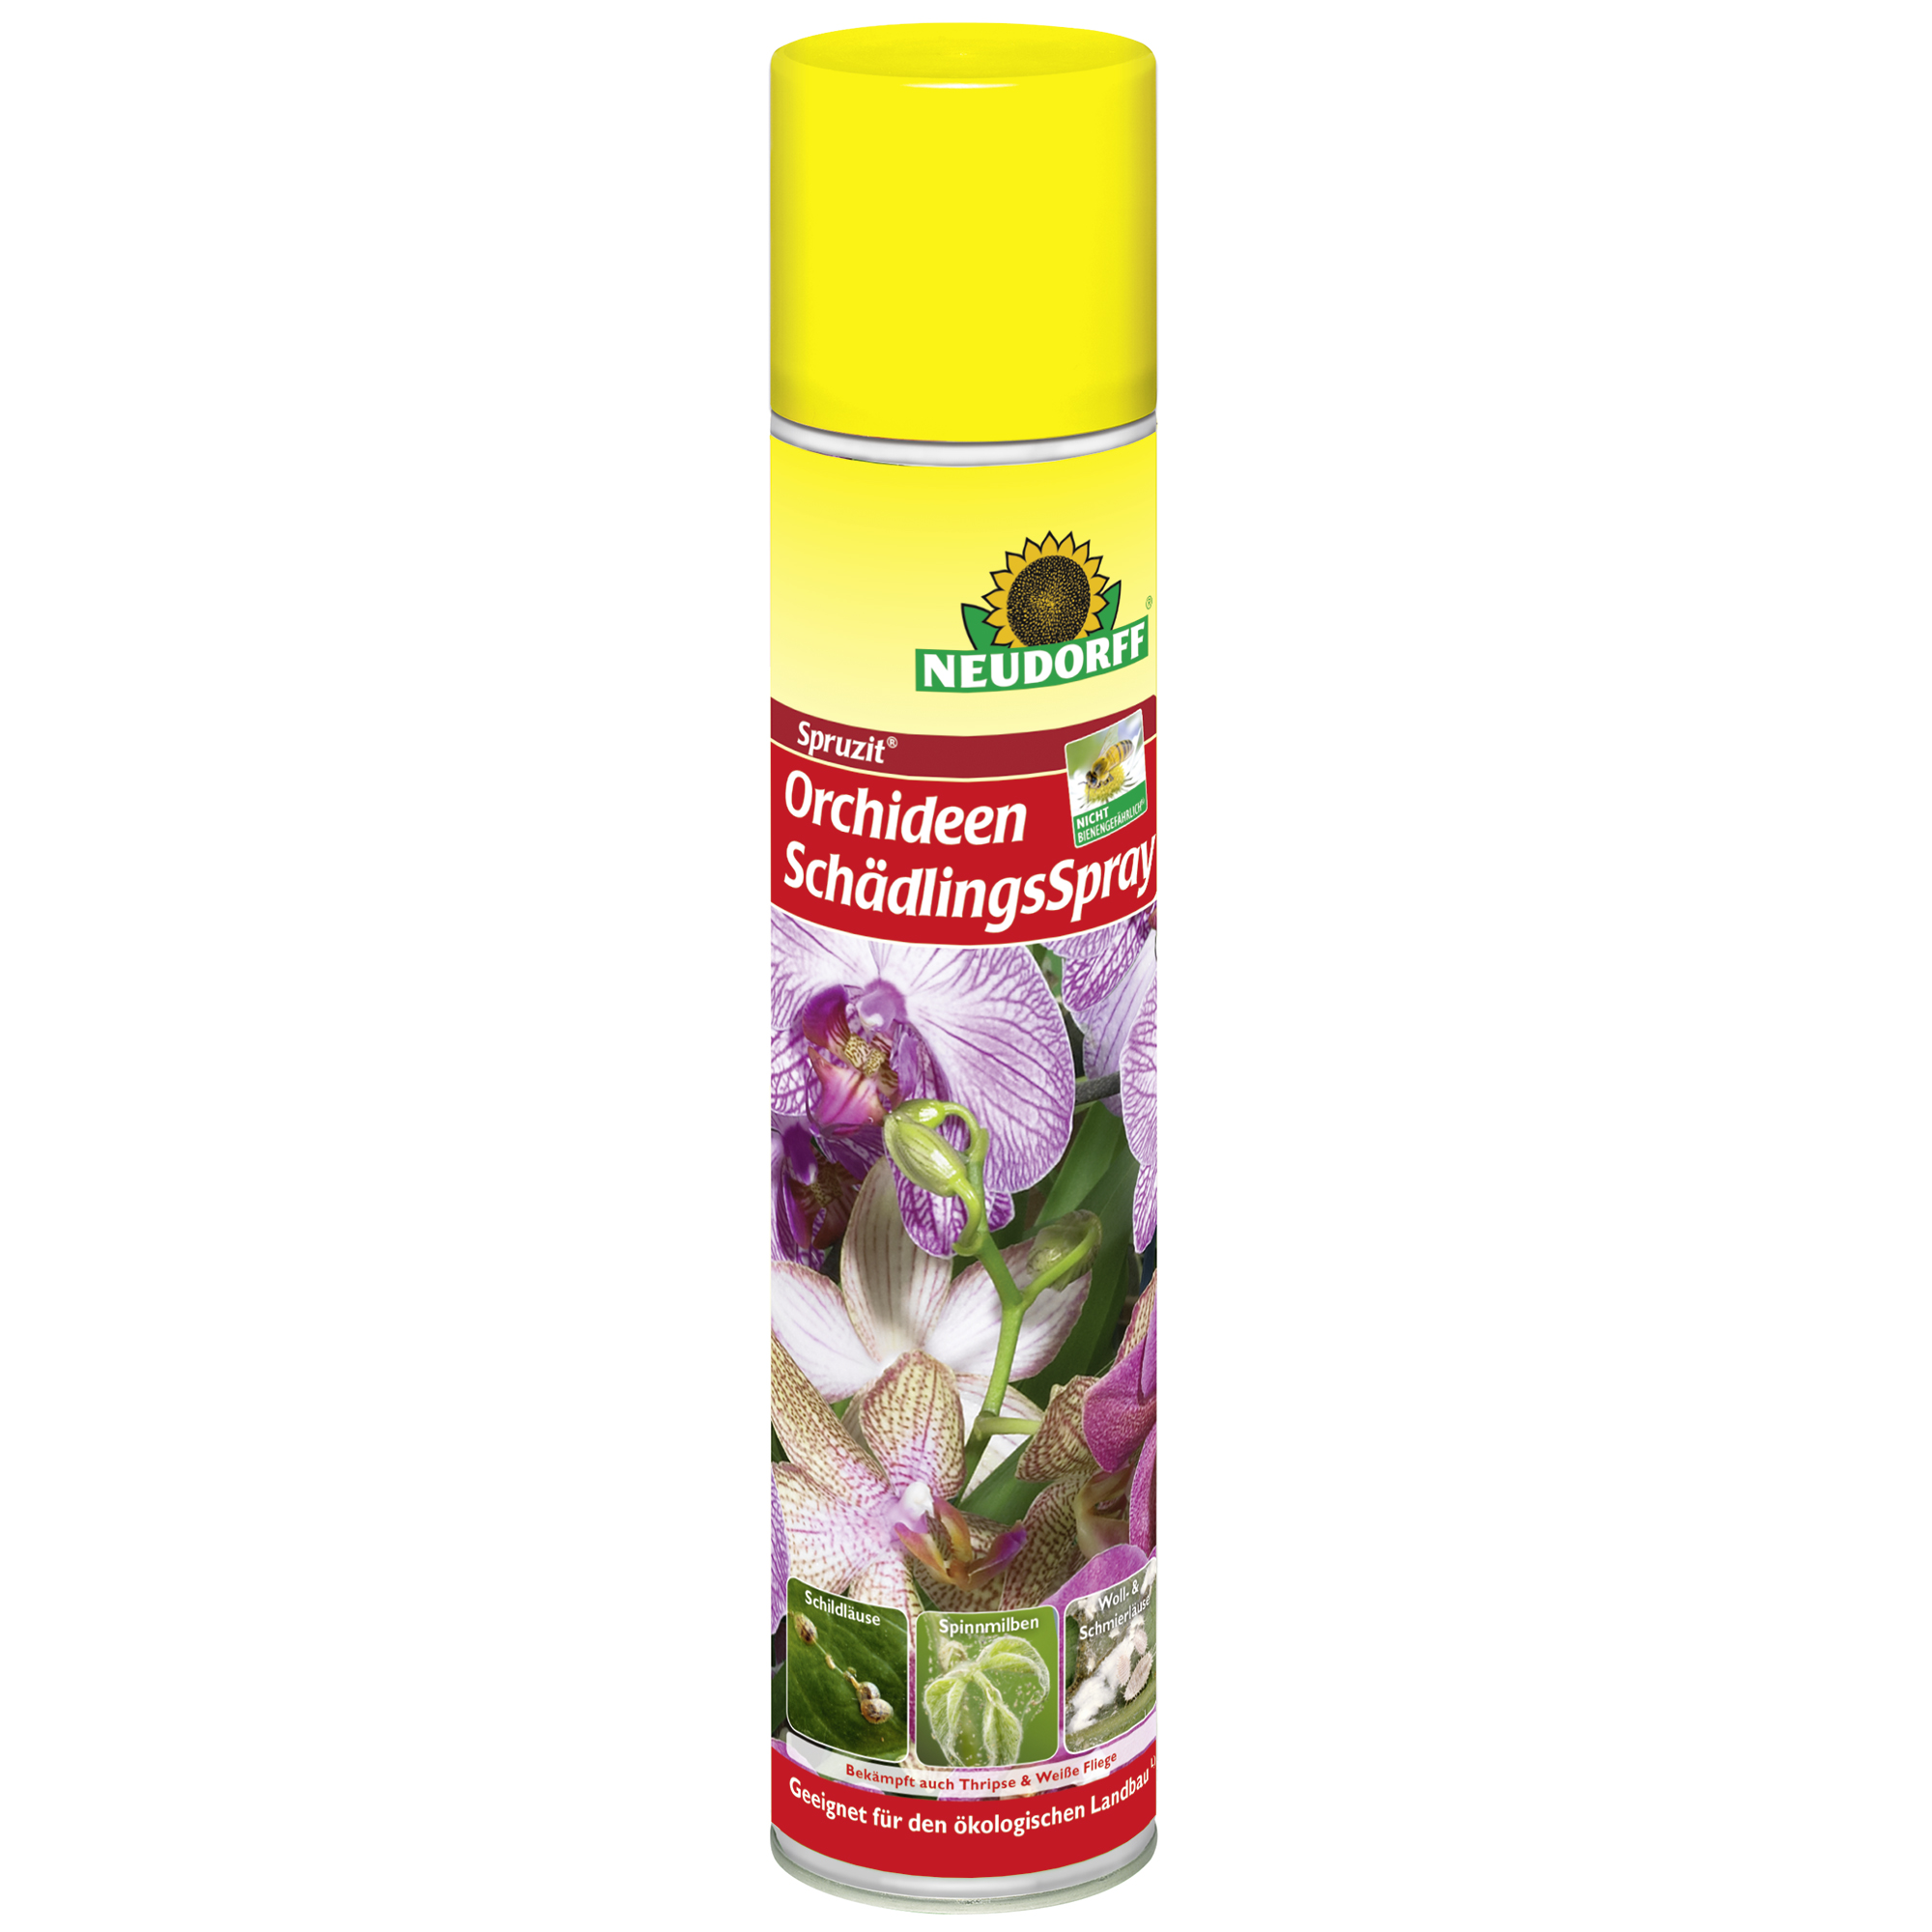 Spruzit Orchideen-Schädlingsspray 300 ml + product picture